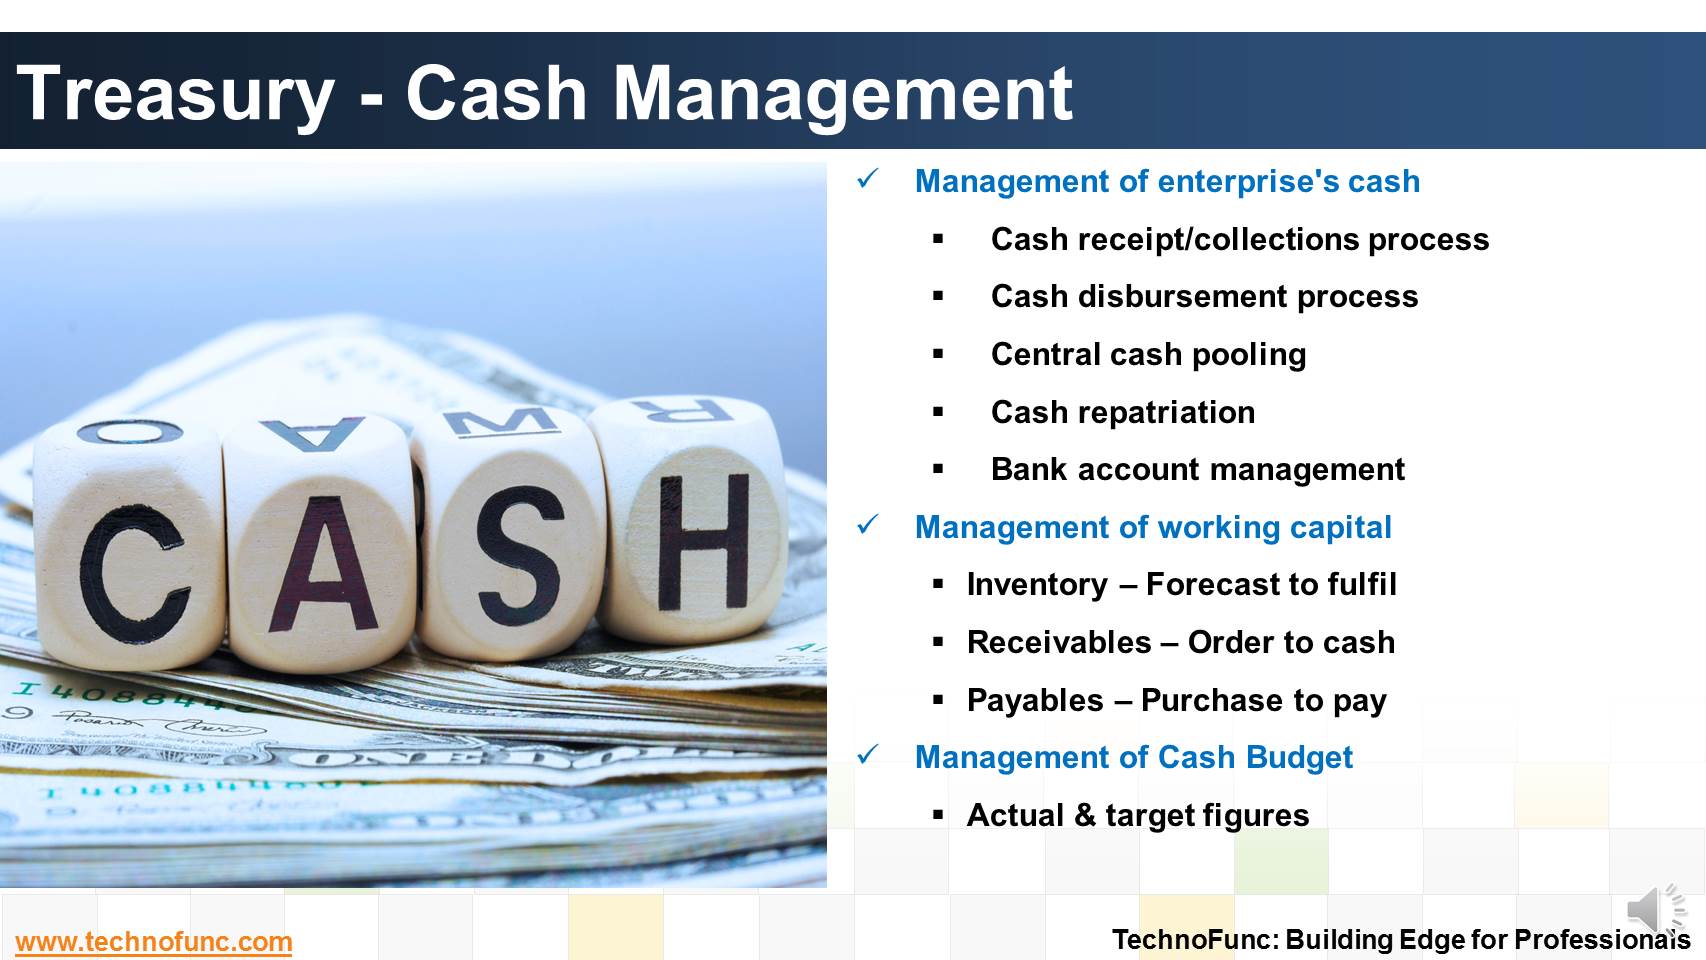 Treasury - Cash Management